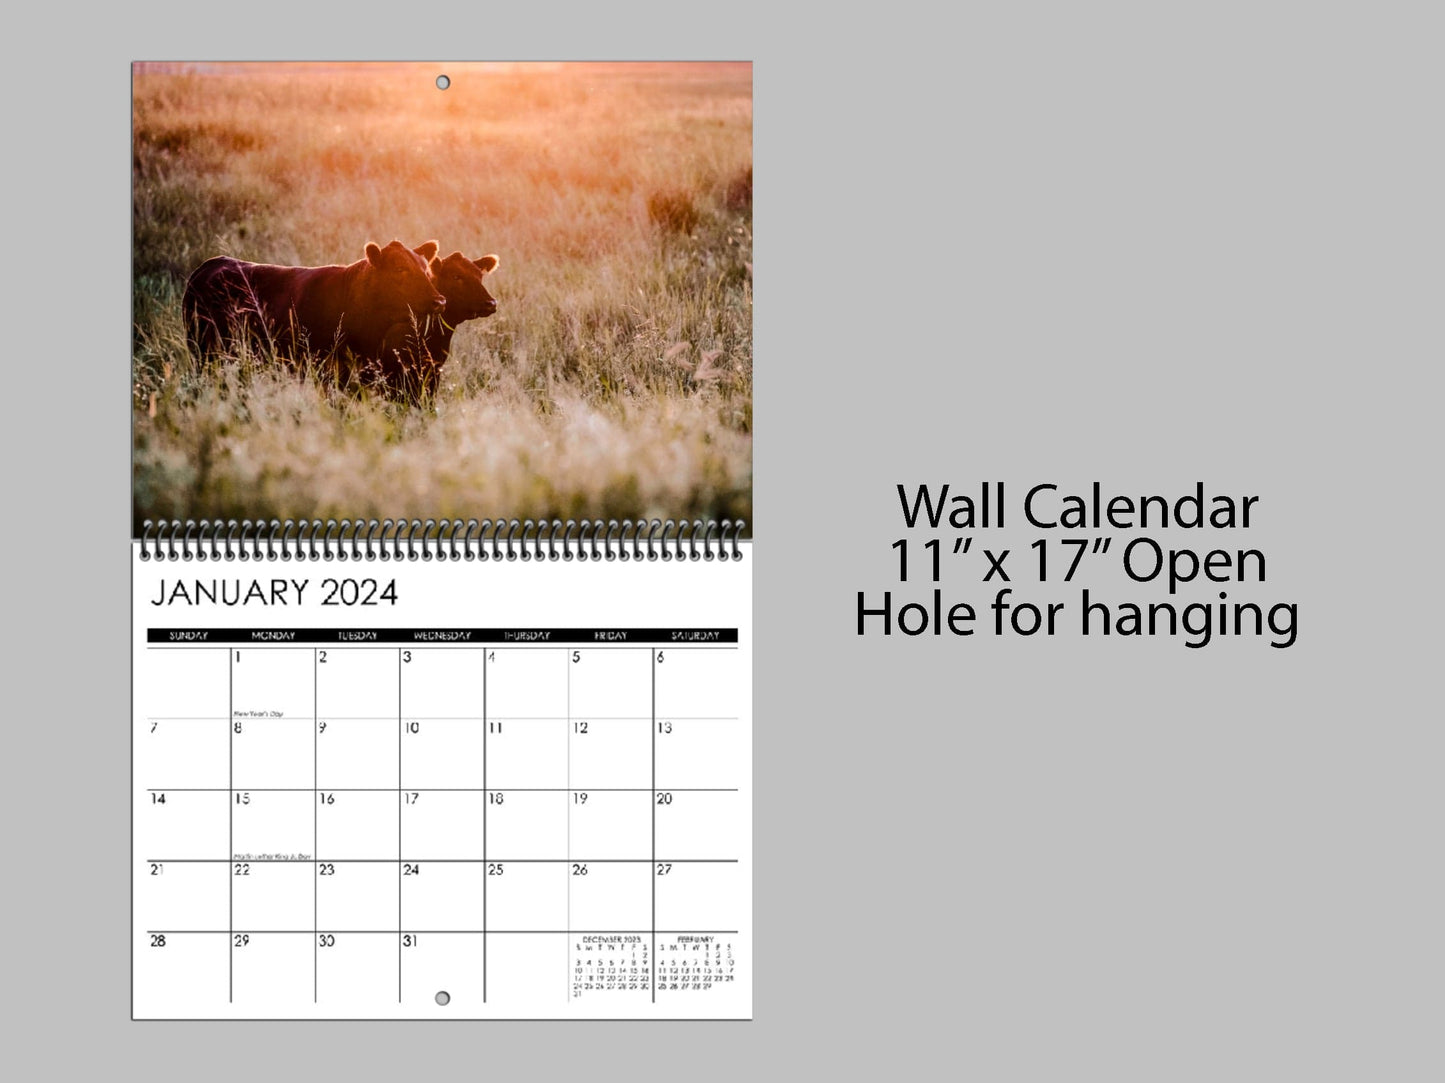 Black Angus Wall Calendar or Desktop Planner - 2024 Calendar Teri James Photography